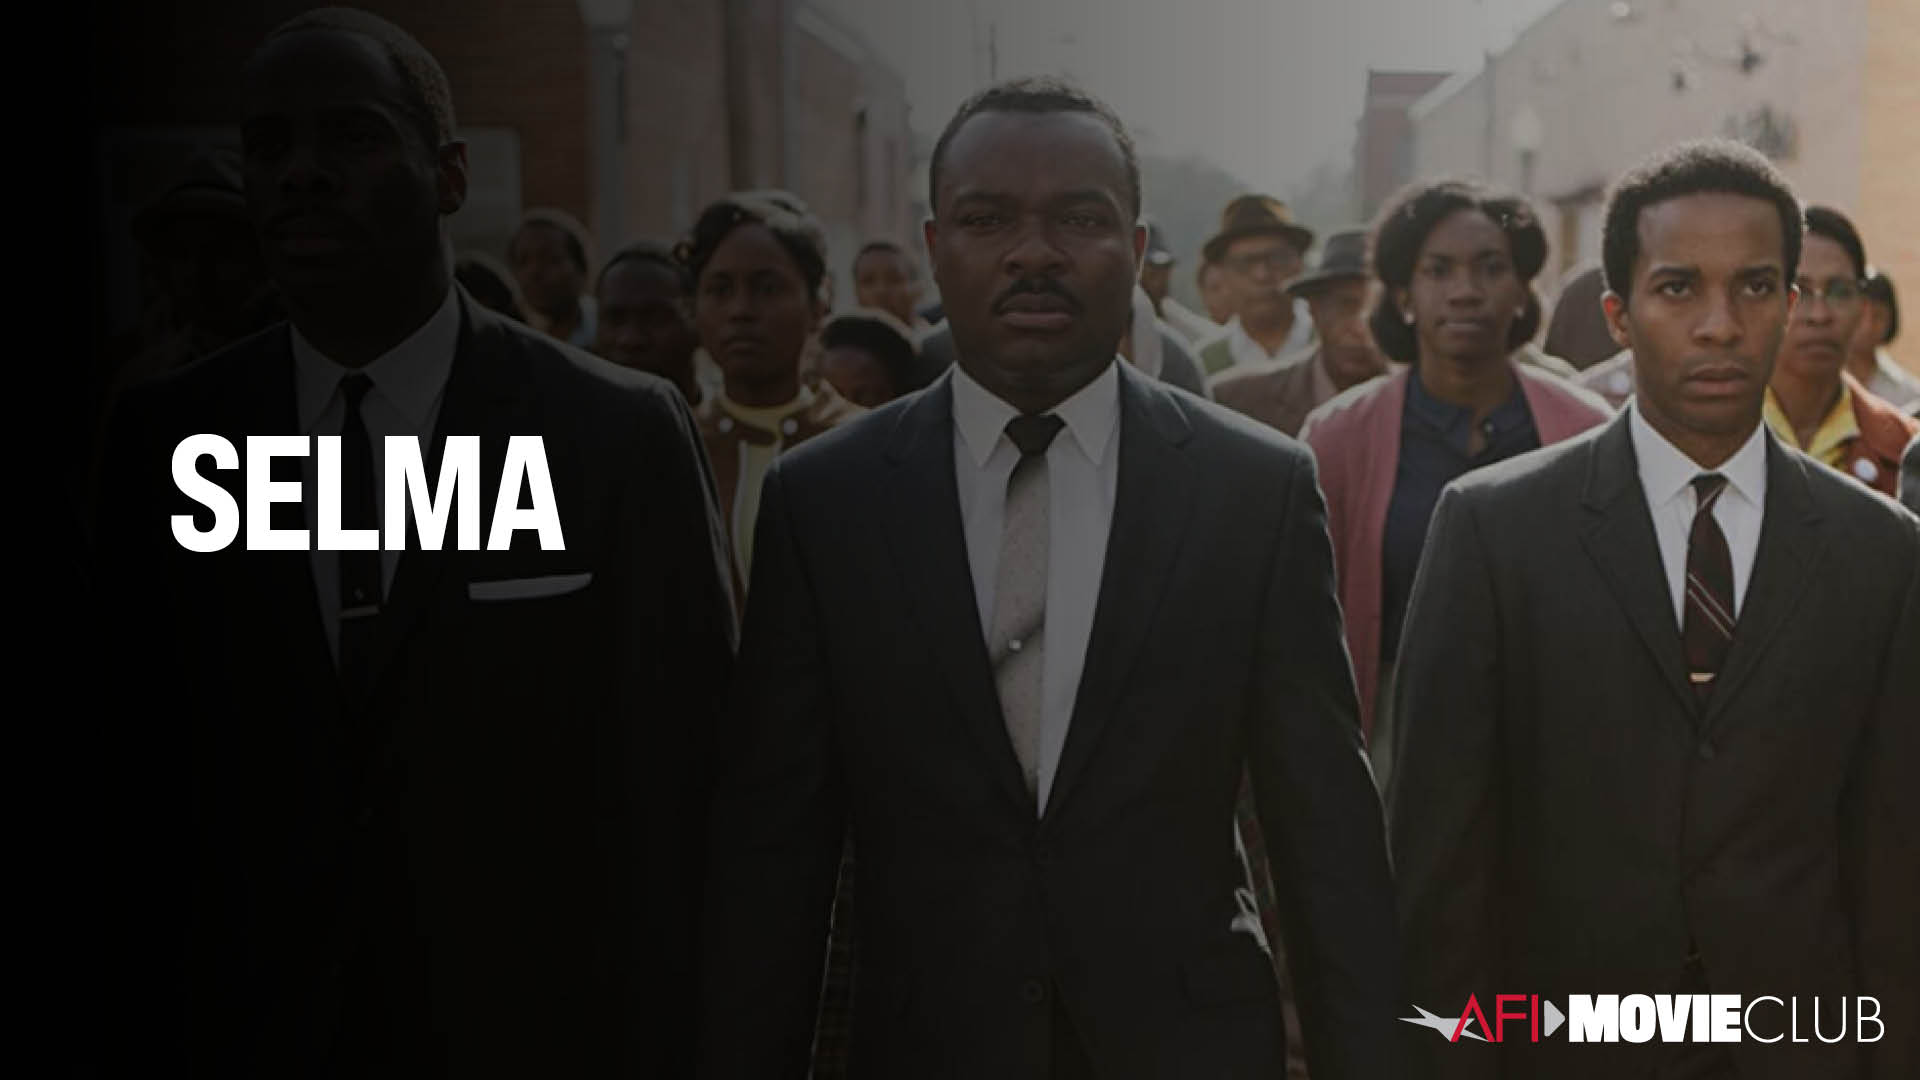 Selma Film Still - David Oyelowo, André Holland, and Stephan James